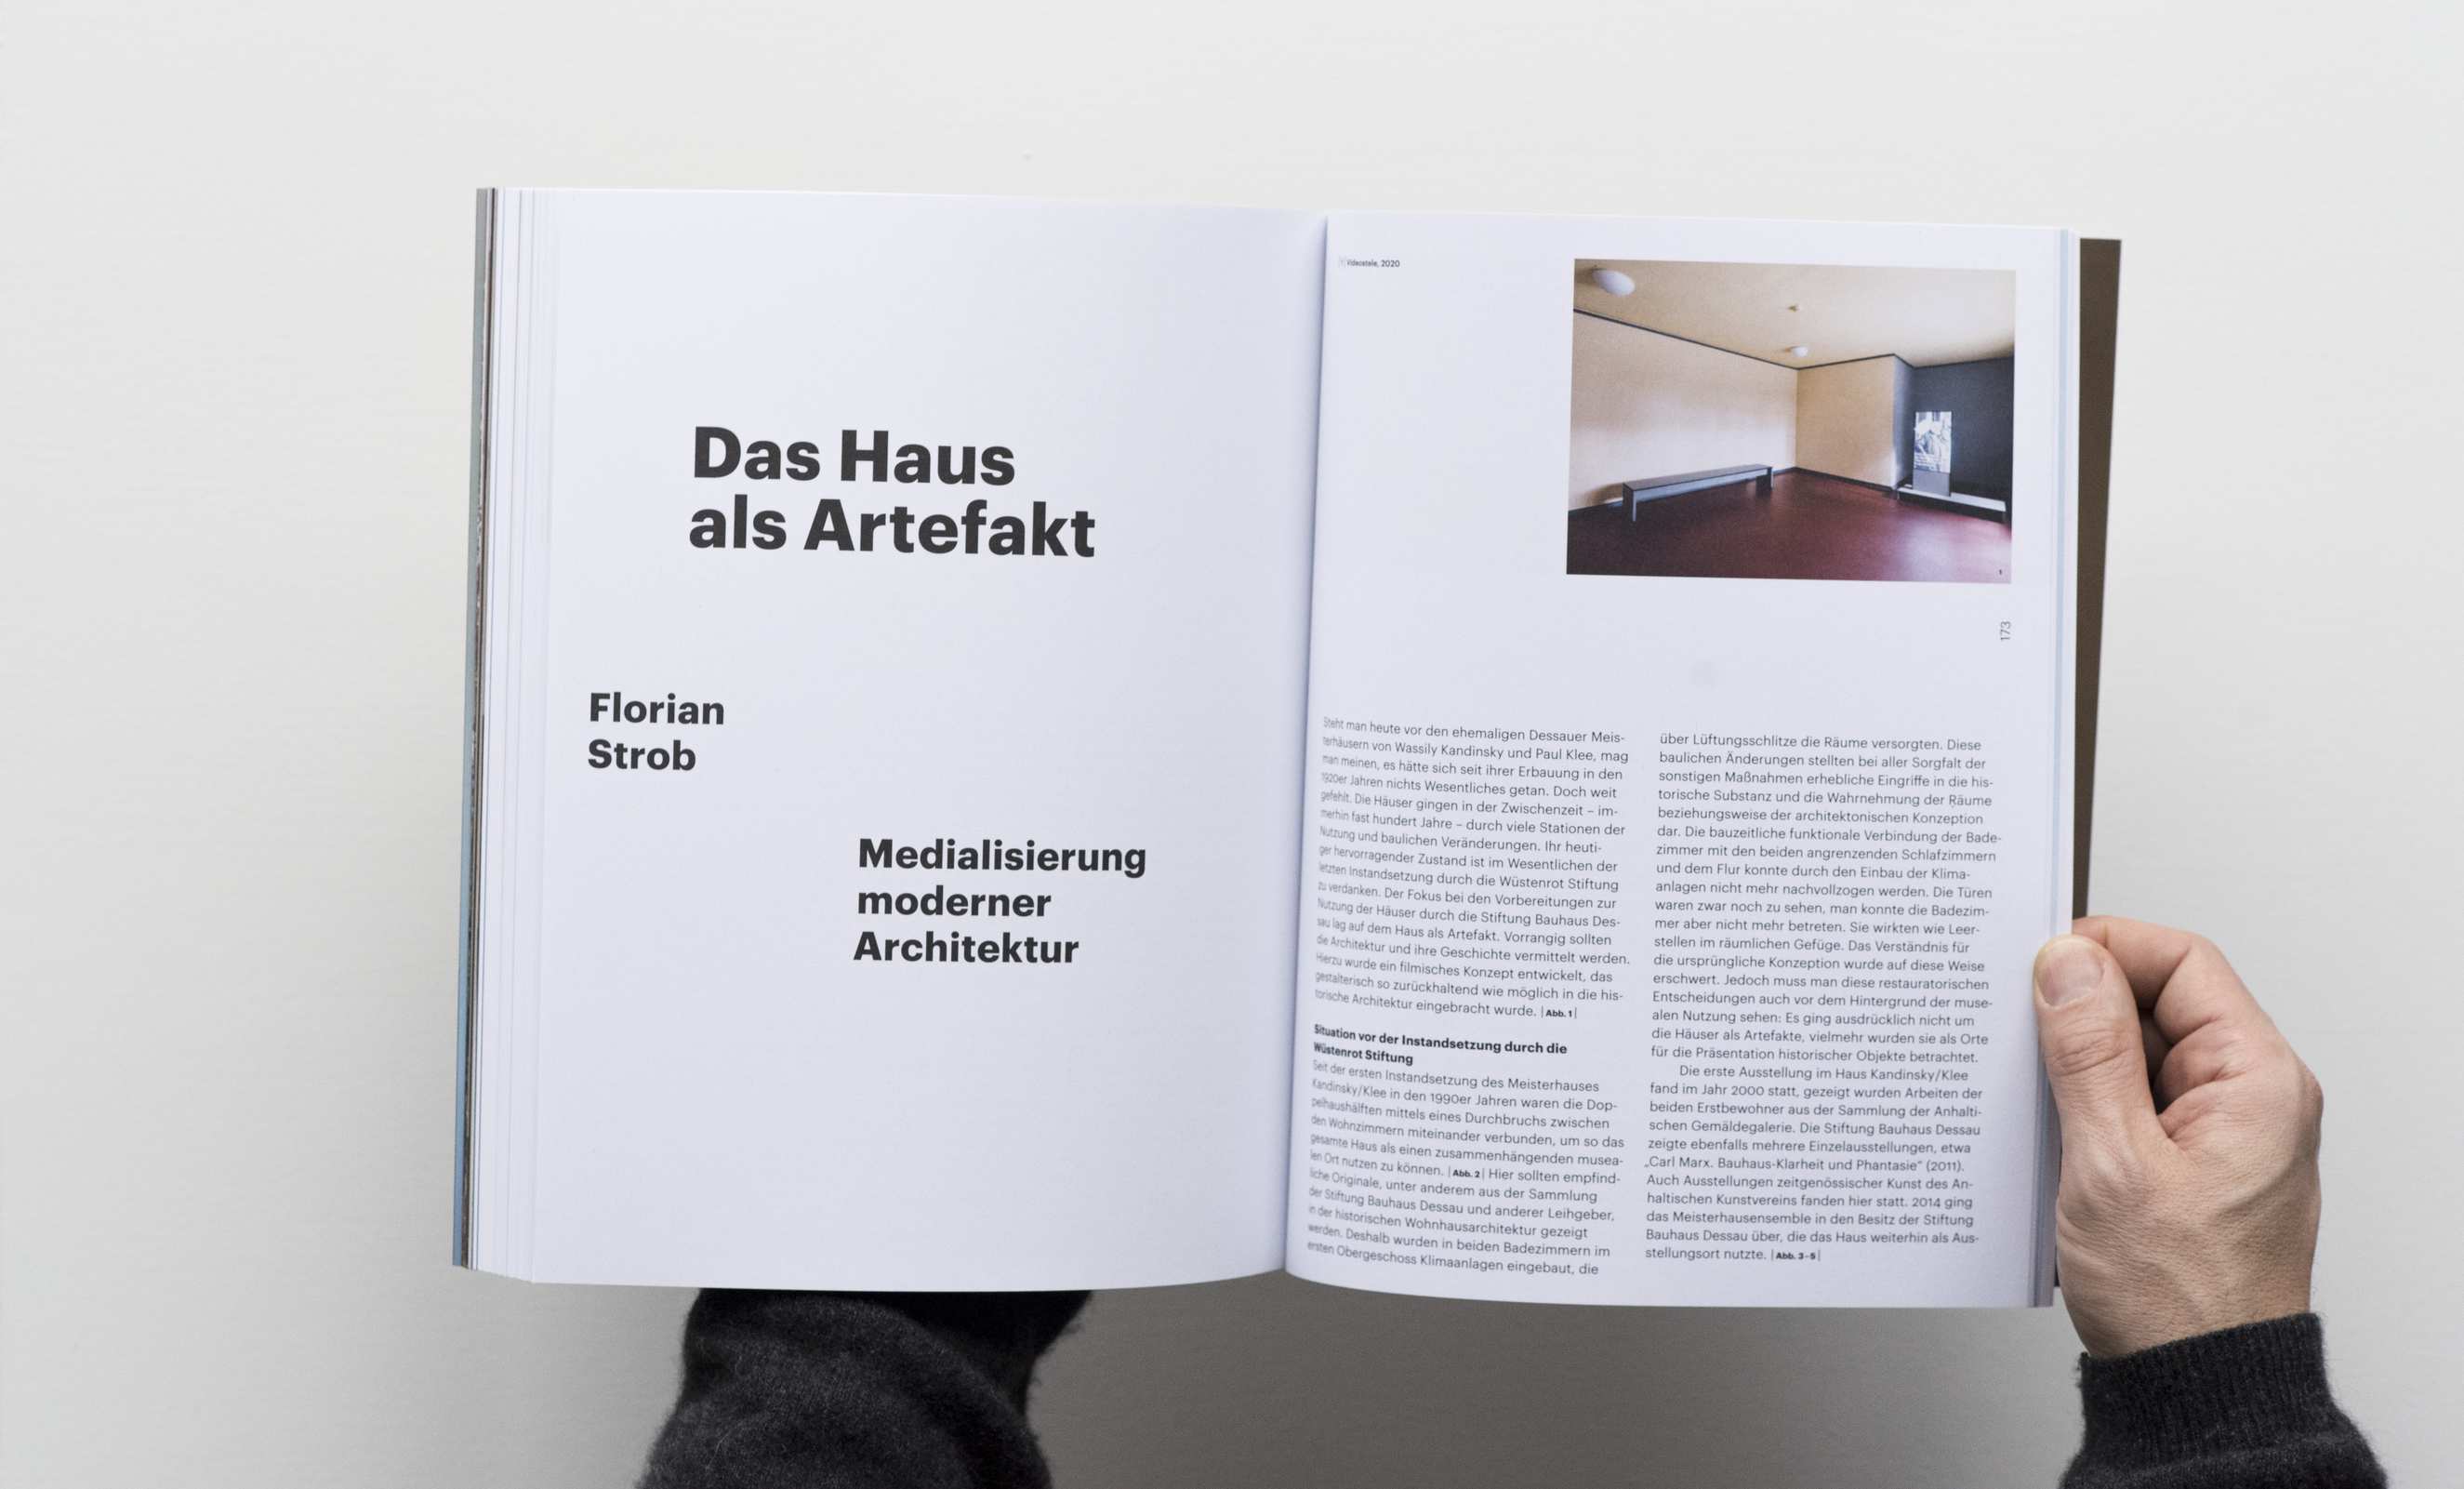 meisterhaus-kandinsky-klee-book-16-2650x1600px